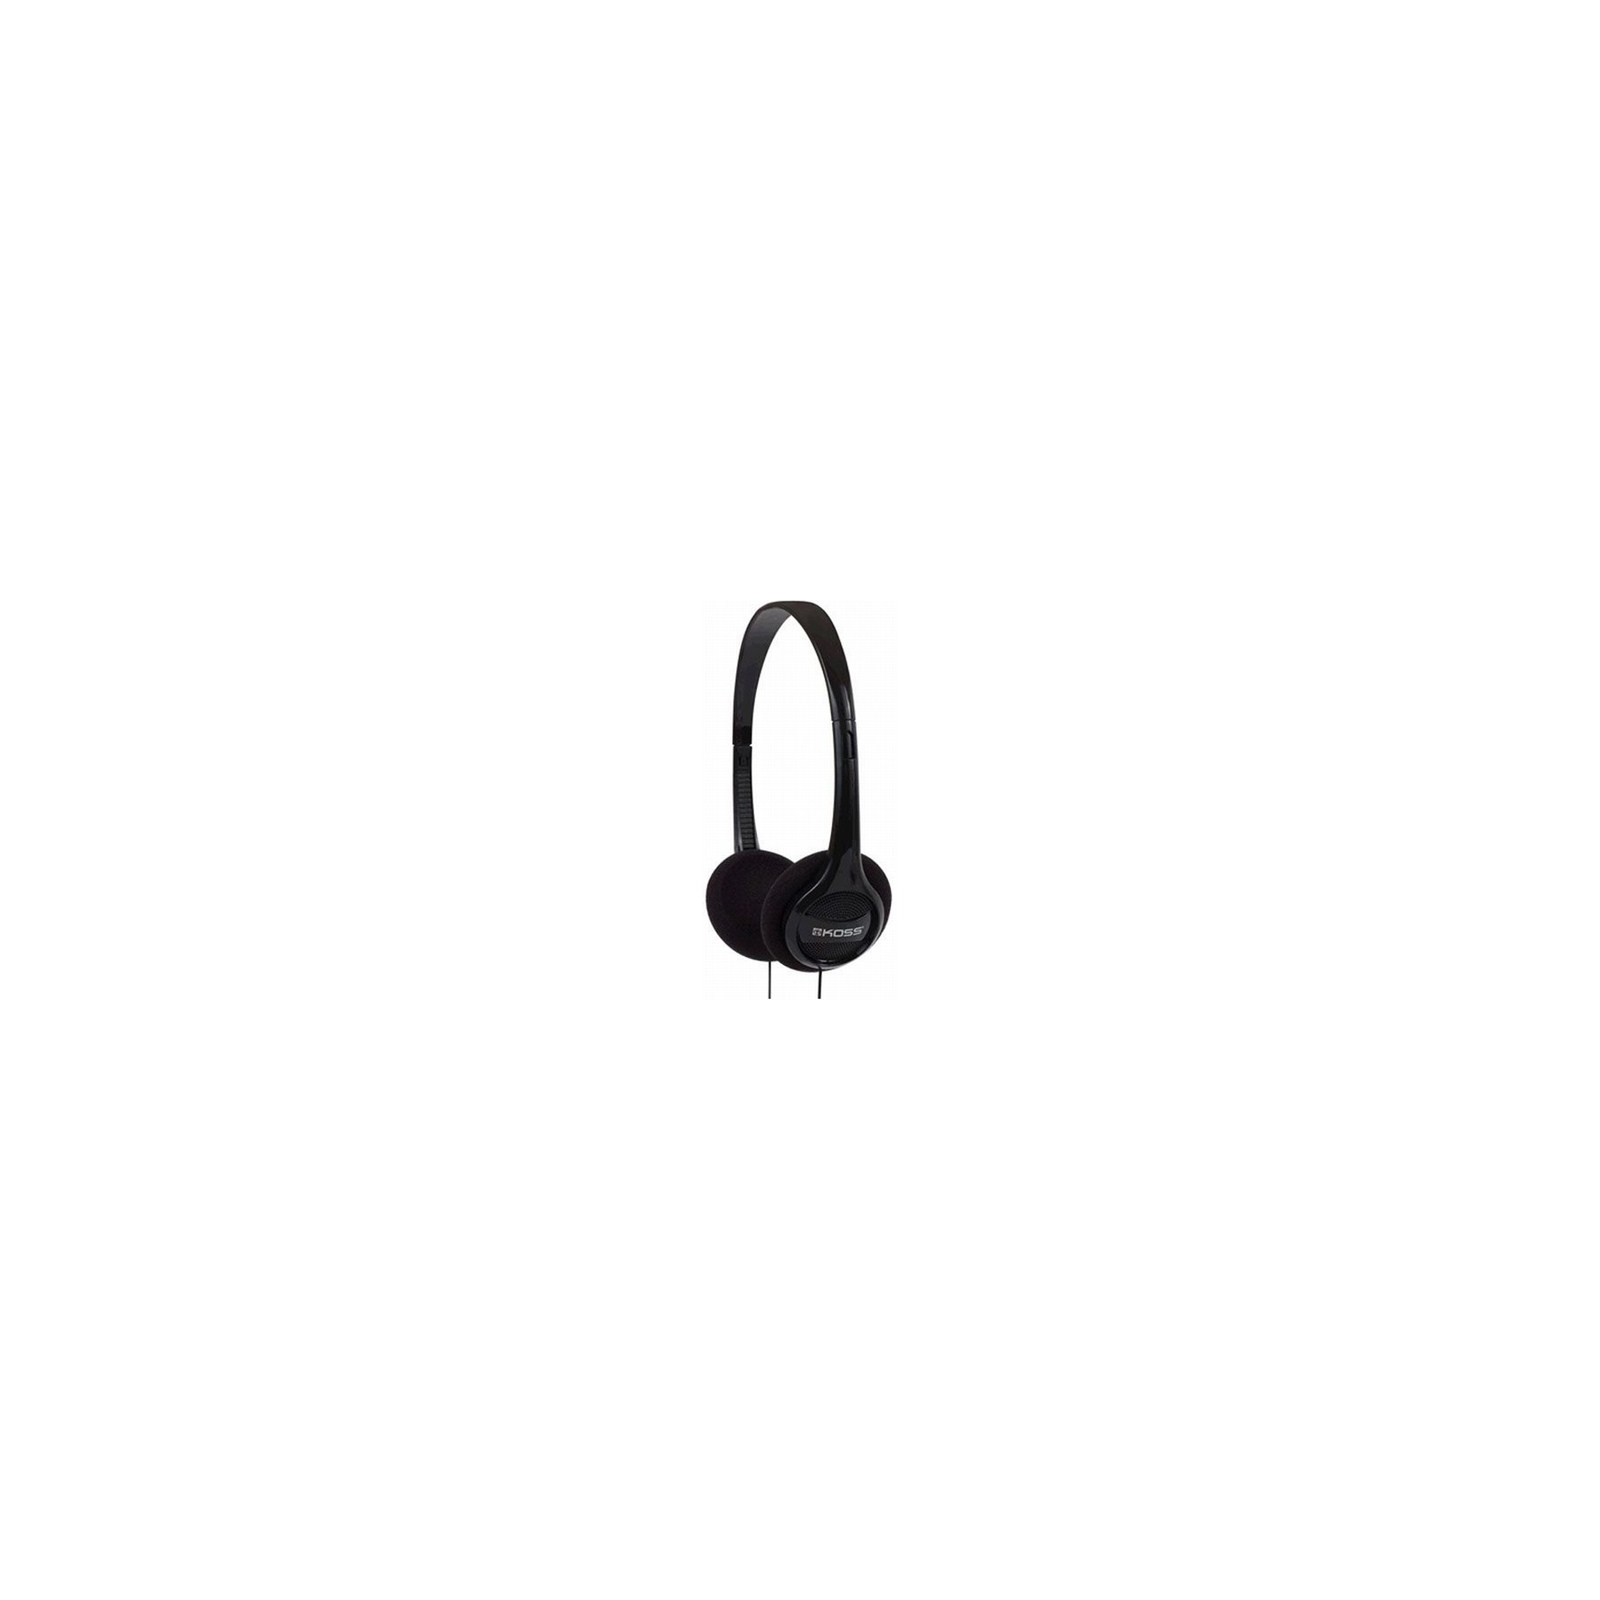 Навушники Koss KPH7 Black (KPH7)